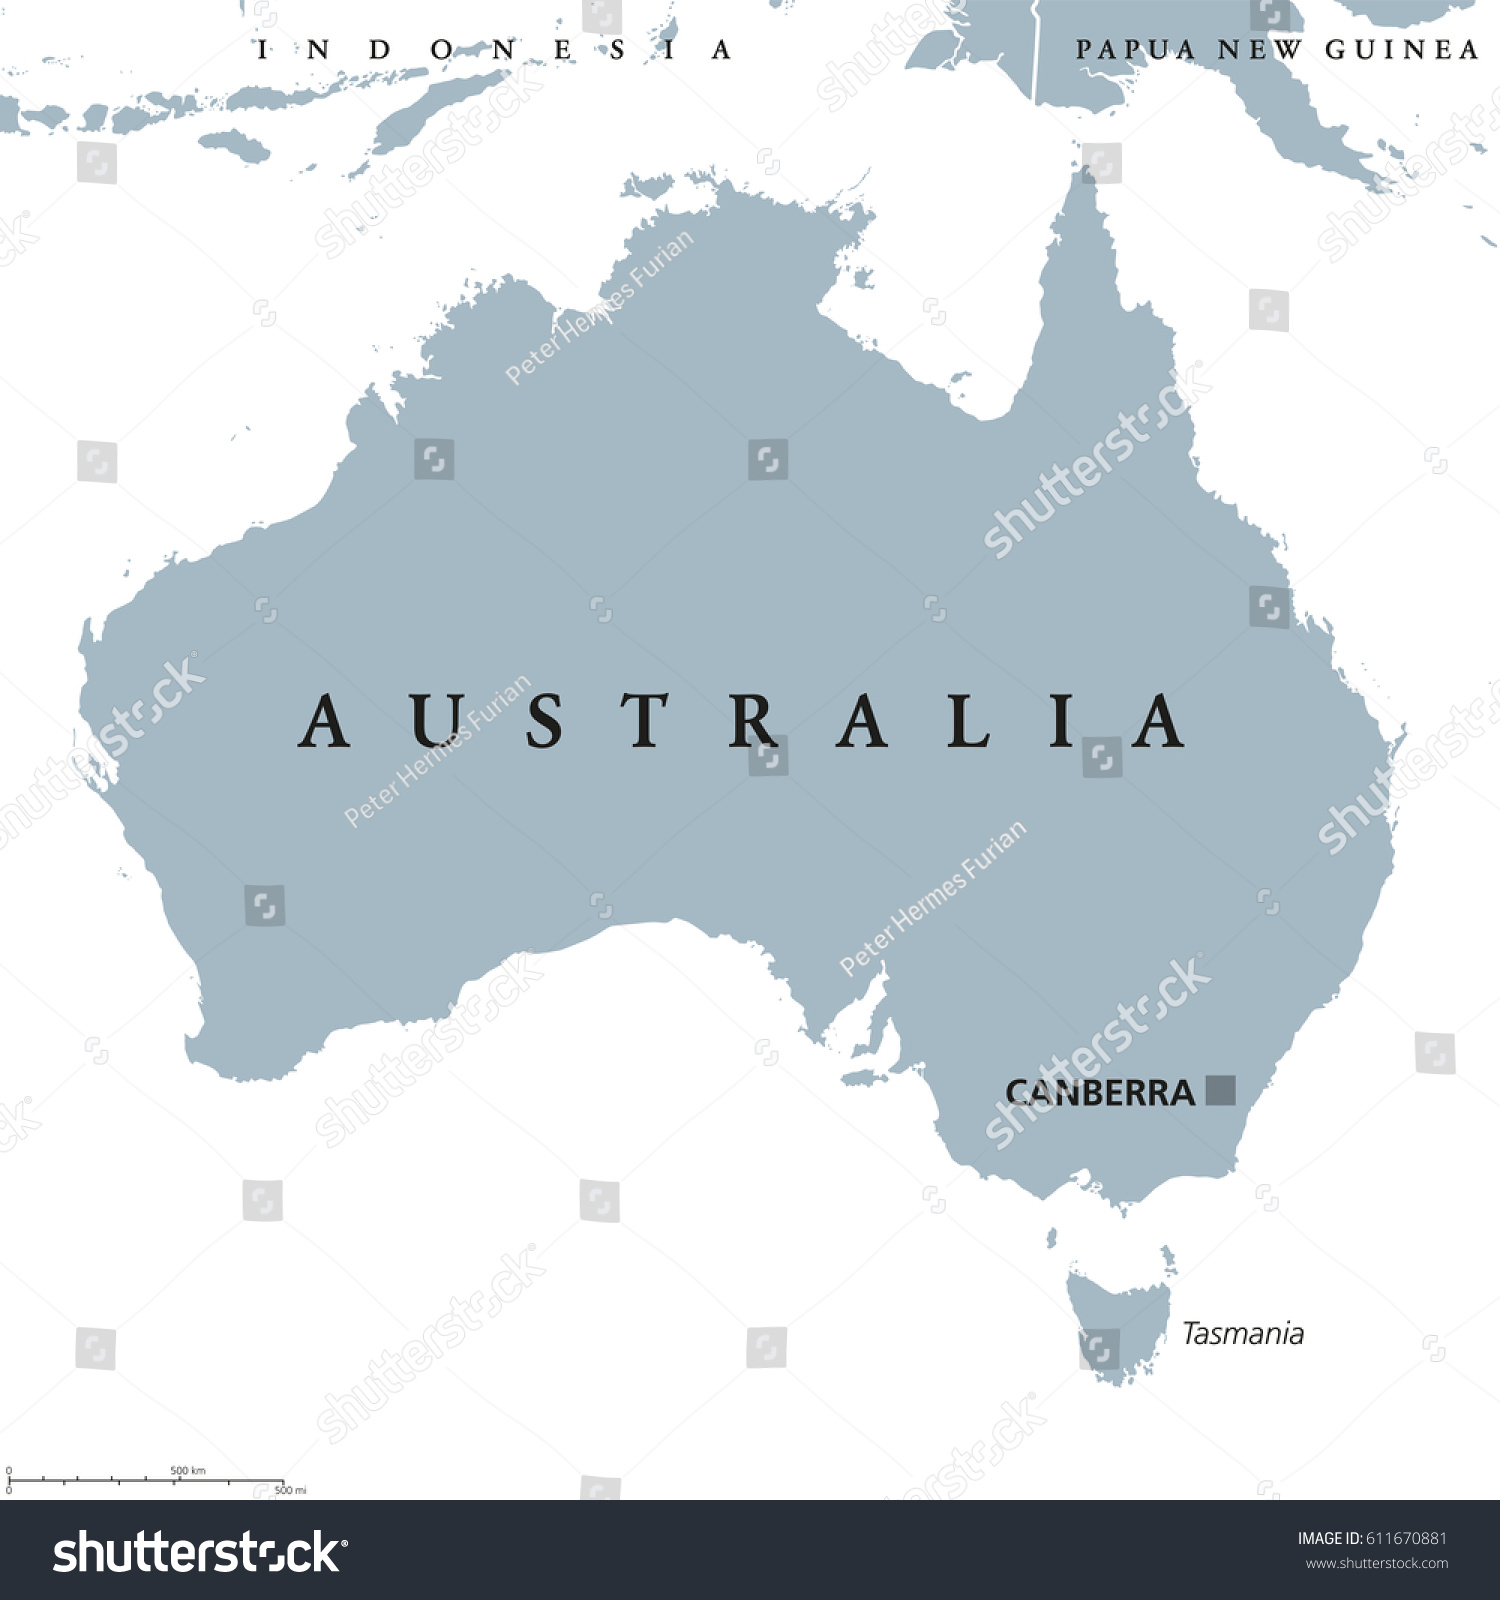 Australia Political Map Stock Vector (Royalty Free) 611670881